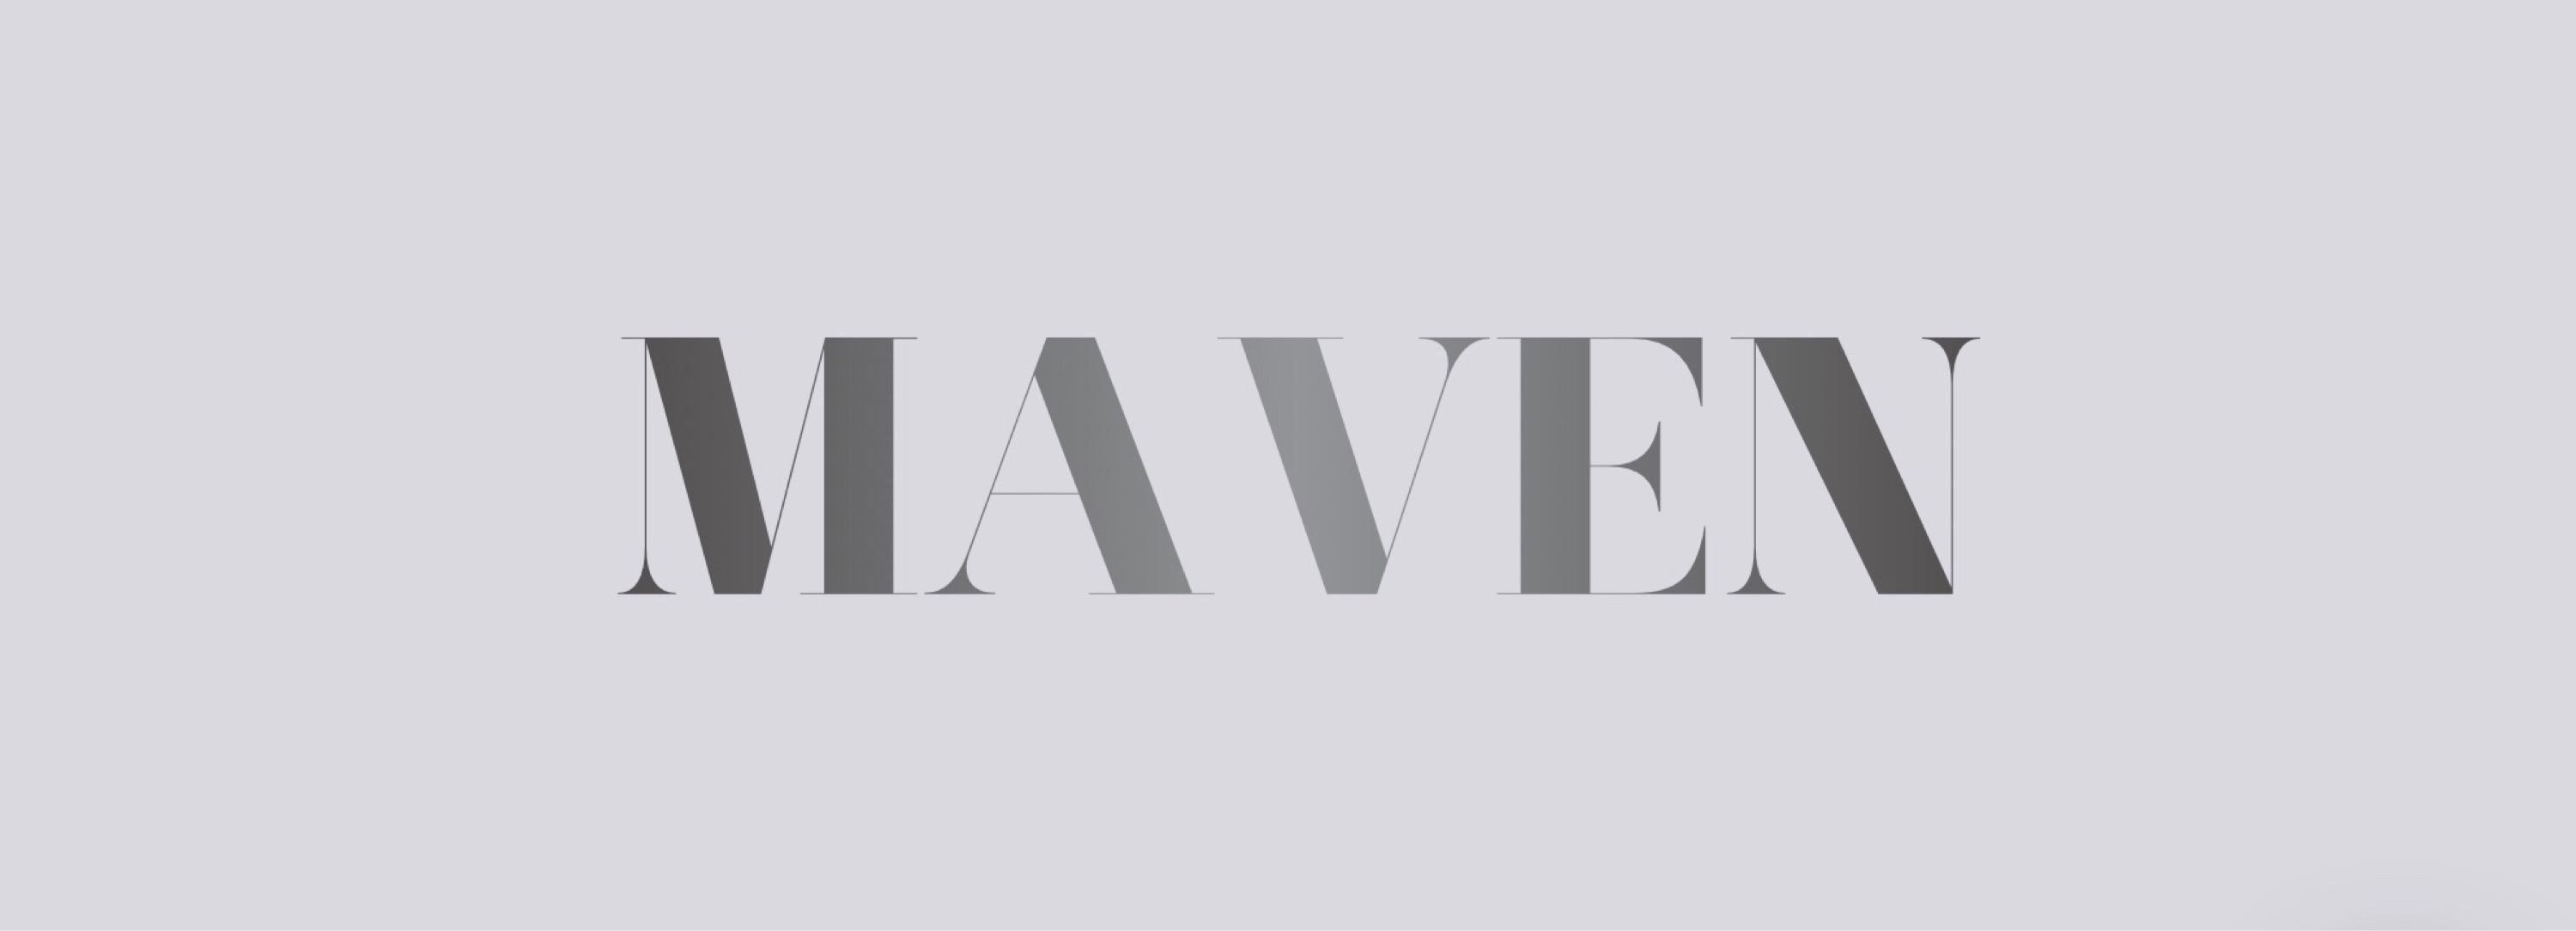 Maven Refined Technology Logo